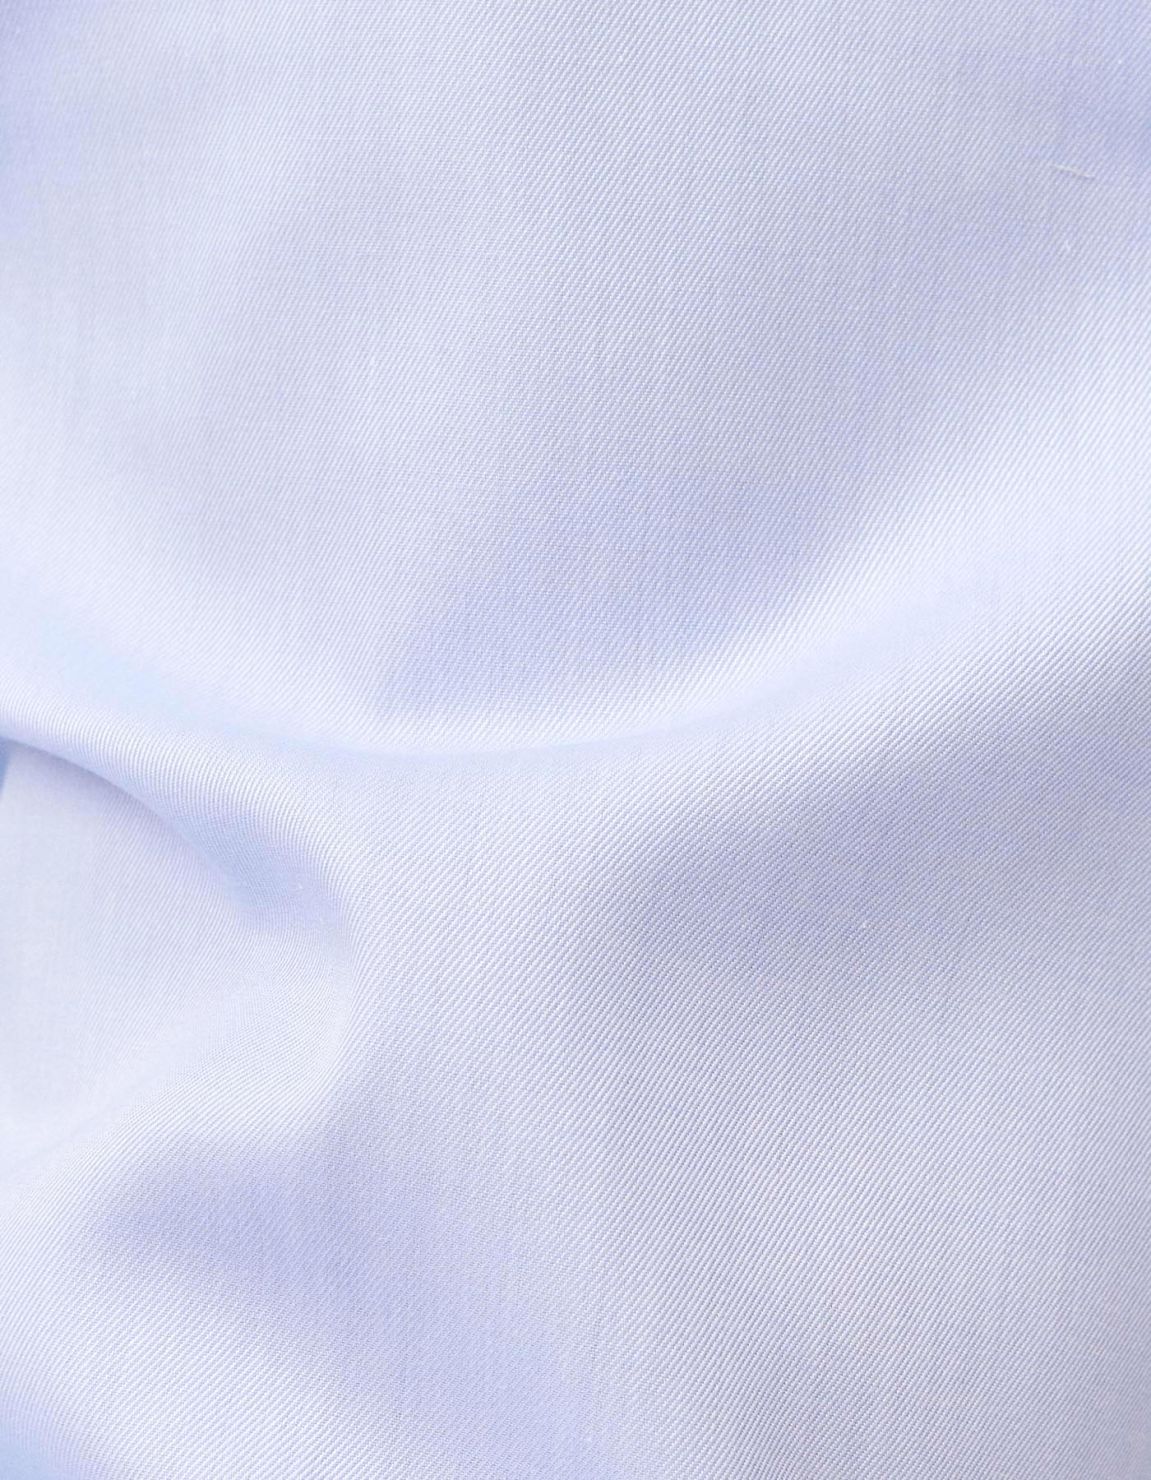 Shirt Collar spread Light Blue Twill Evolution Classic Fit 2